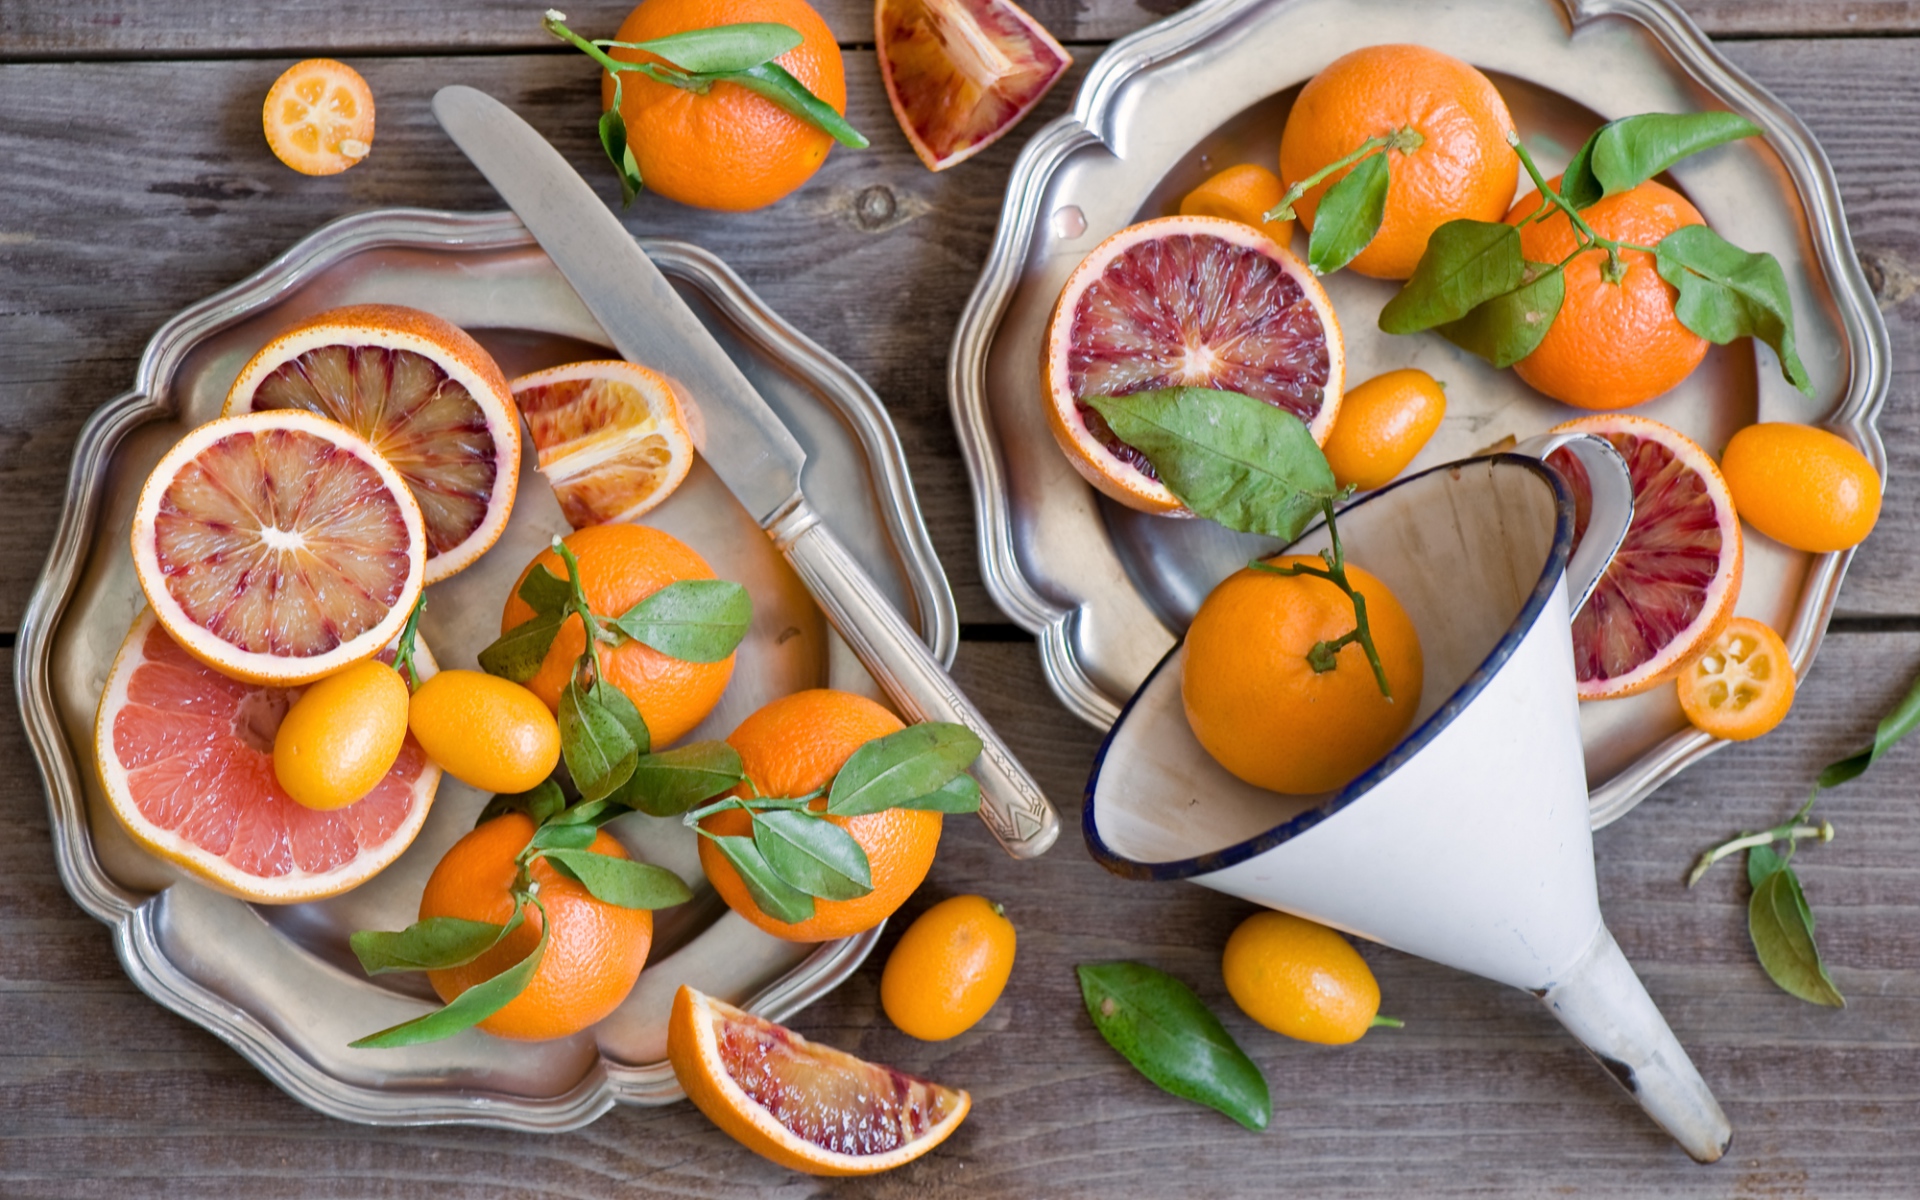 Апельсины на столе